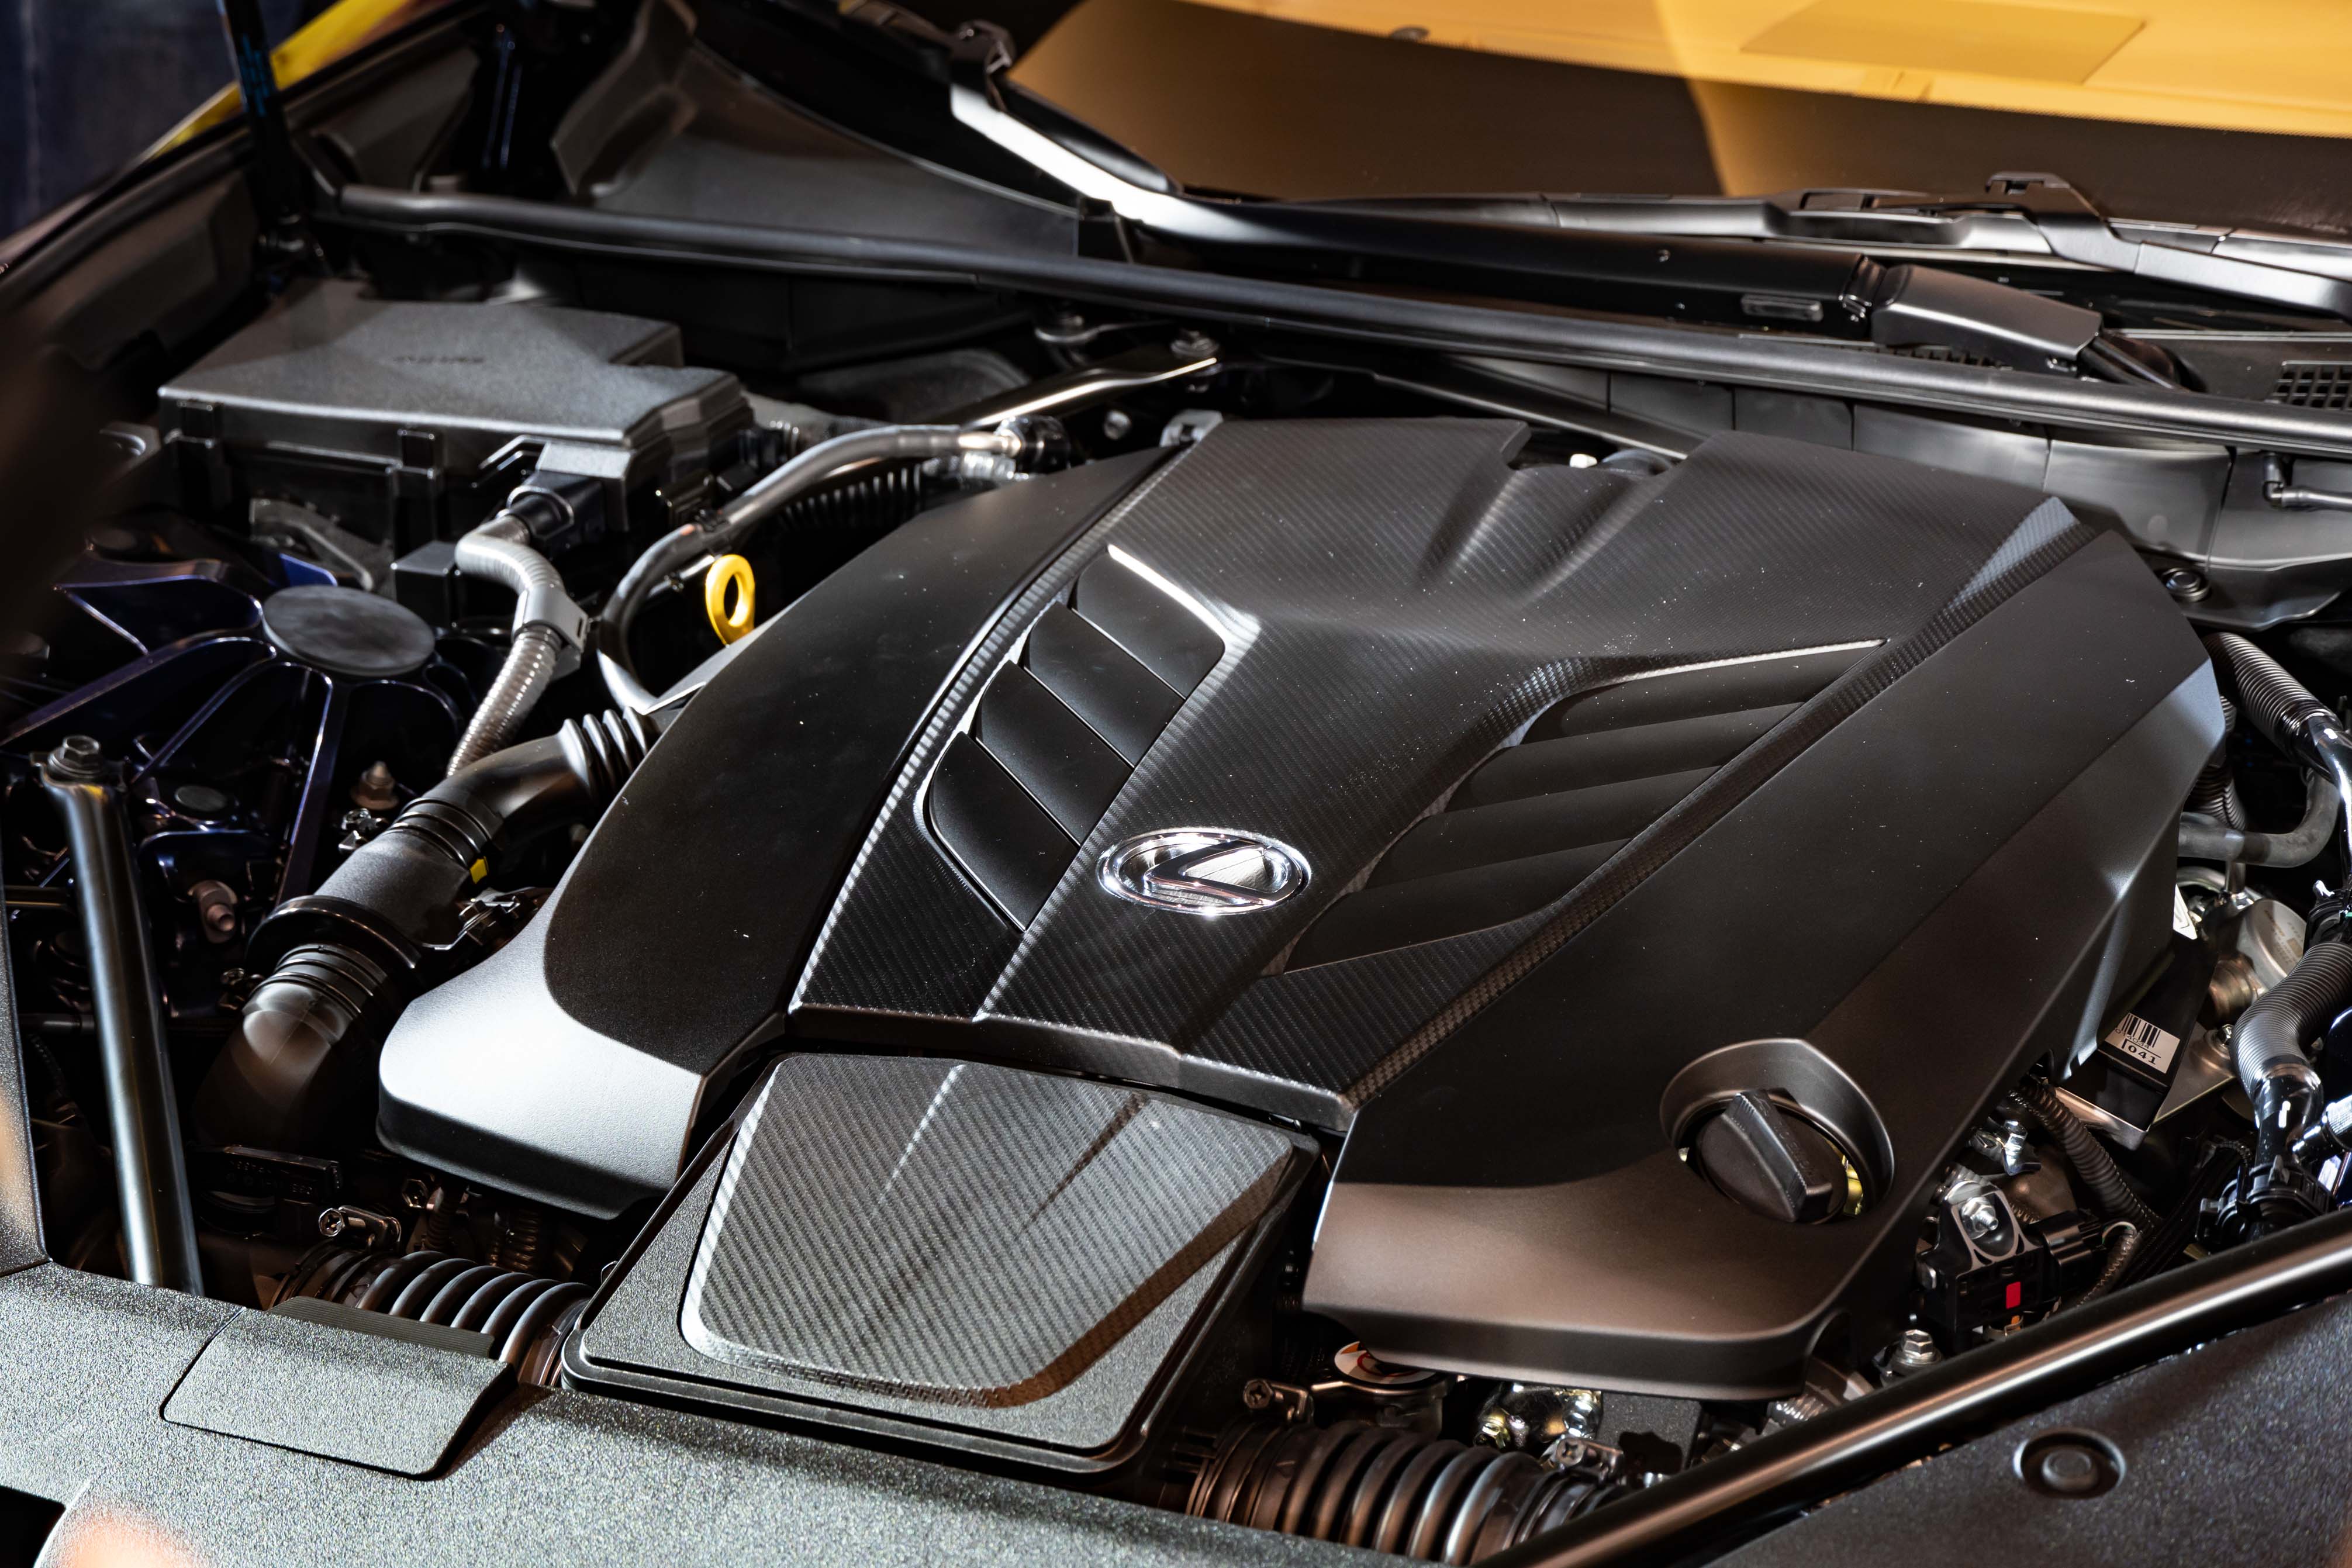 LC Convertible 搭載高達 464 匹馬力的 5.0 升 V8 自然進氣引擎與 10 速手自排變速箱。